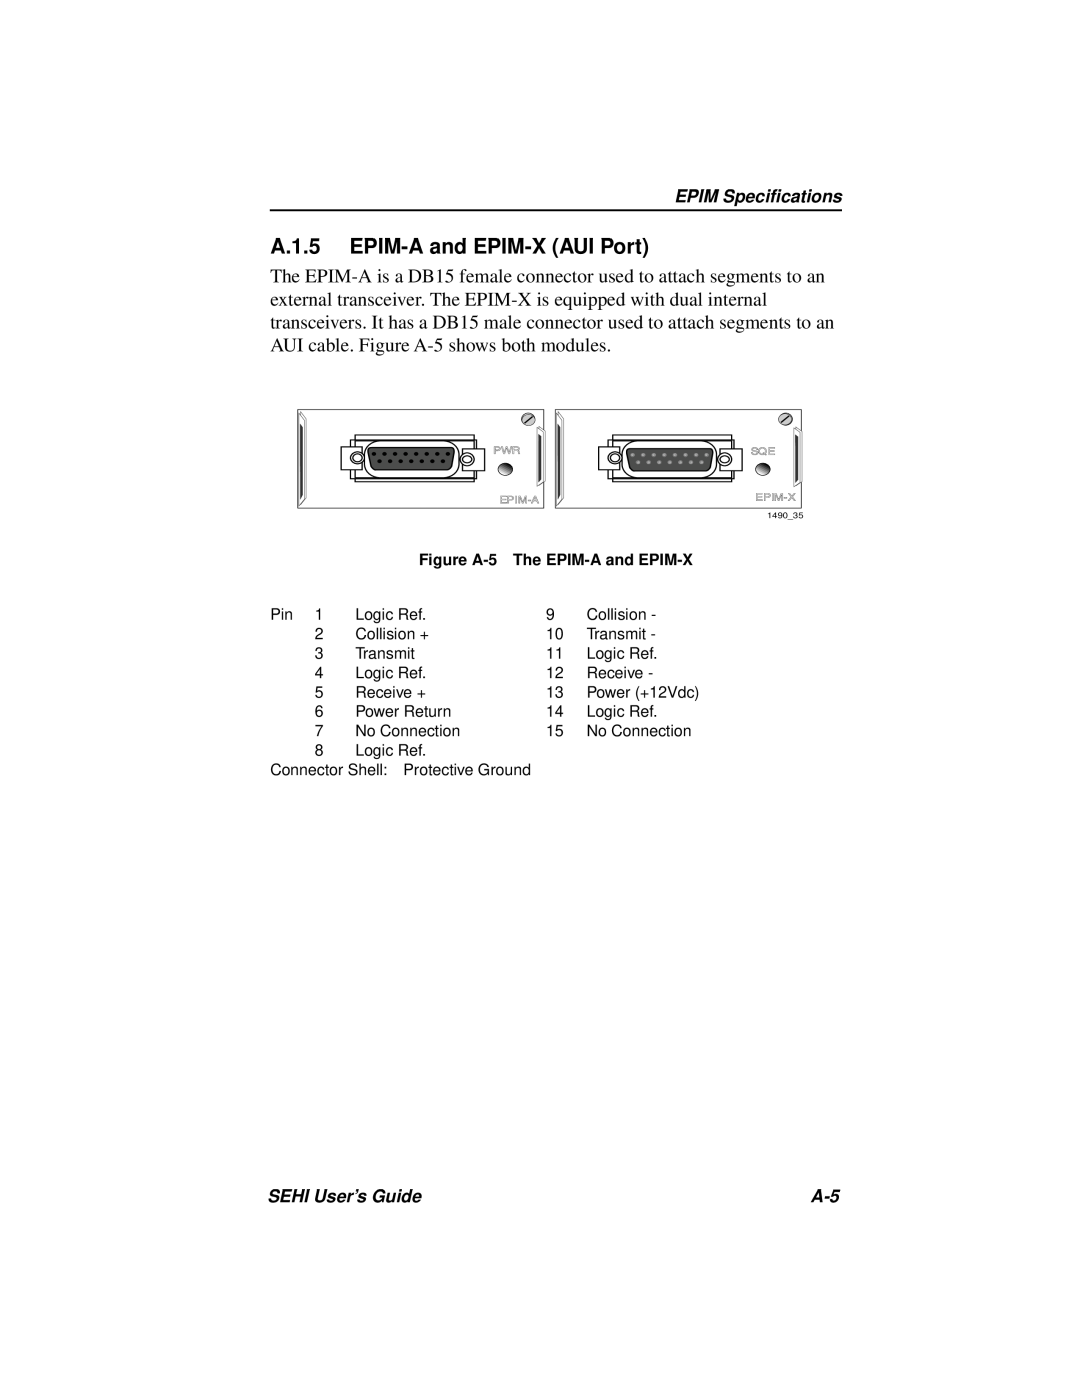 Cabletron Systems SEHI-22FL manual A.1.5 EPIM-A and EPIM-X AUI Port, Figure A-5 The EPIM-A and EPIM-X 